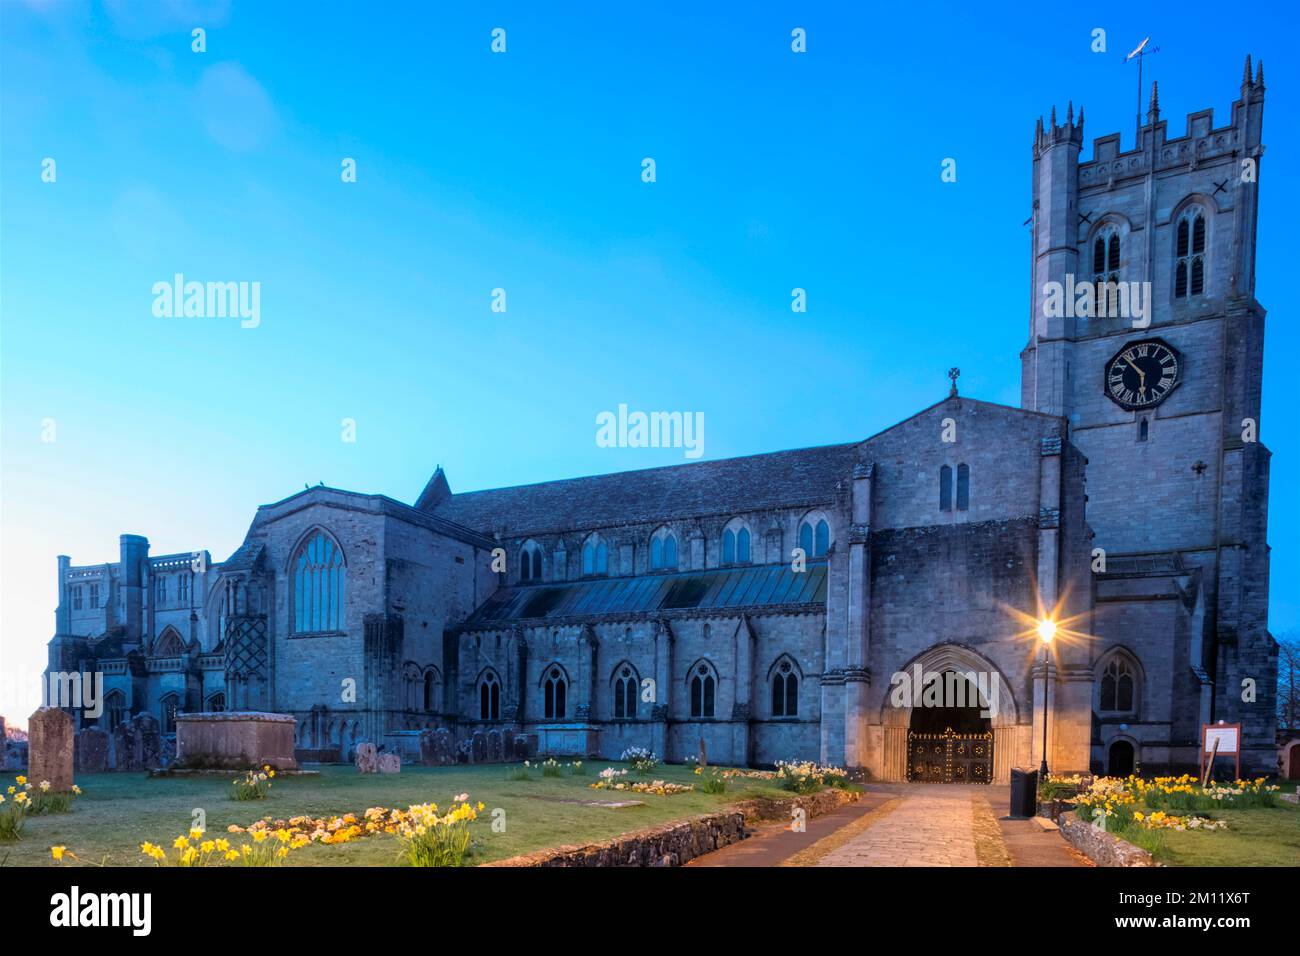 England, Dorset, Christchurch, Christchurch Priory at Night Stock Photo